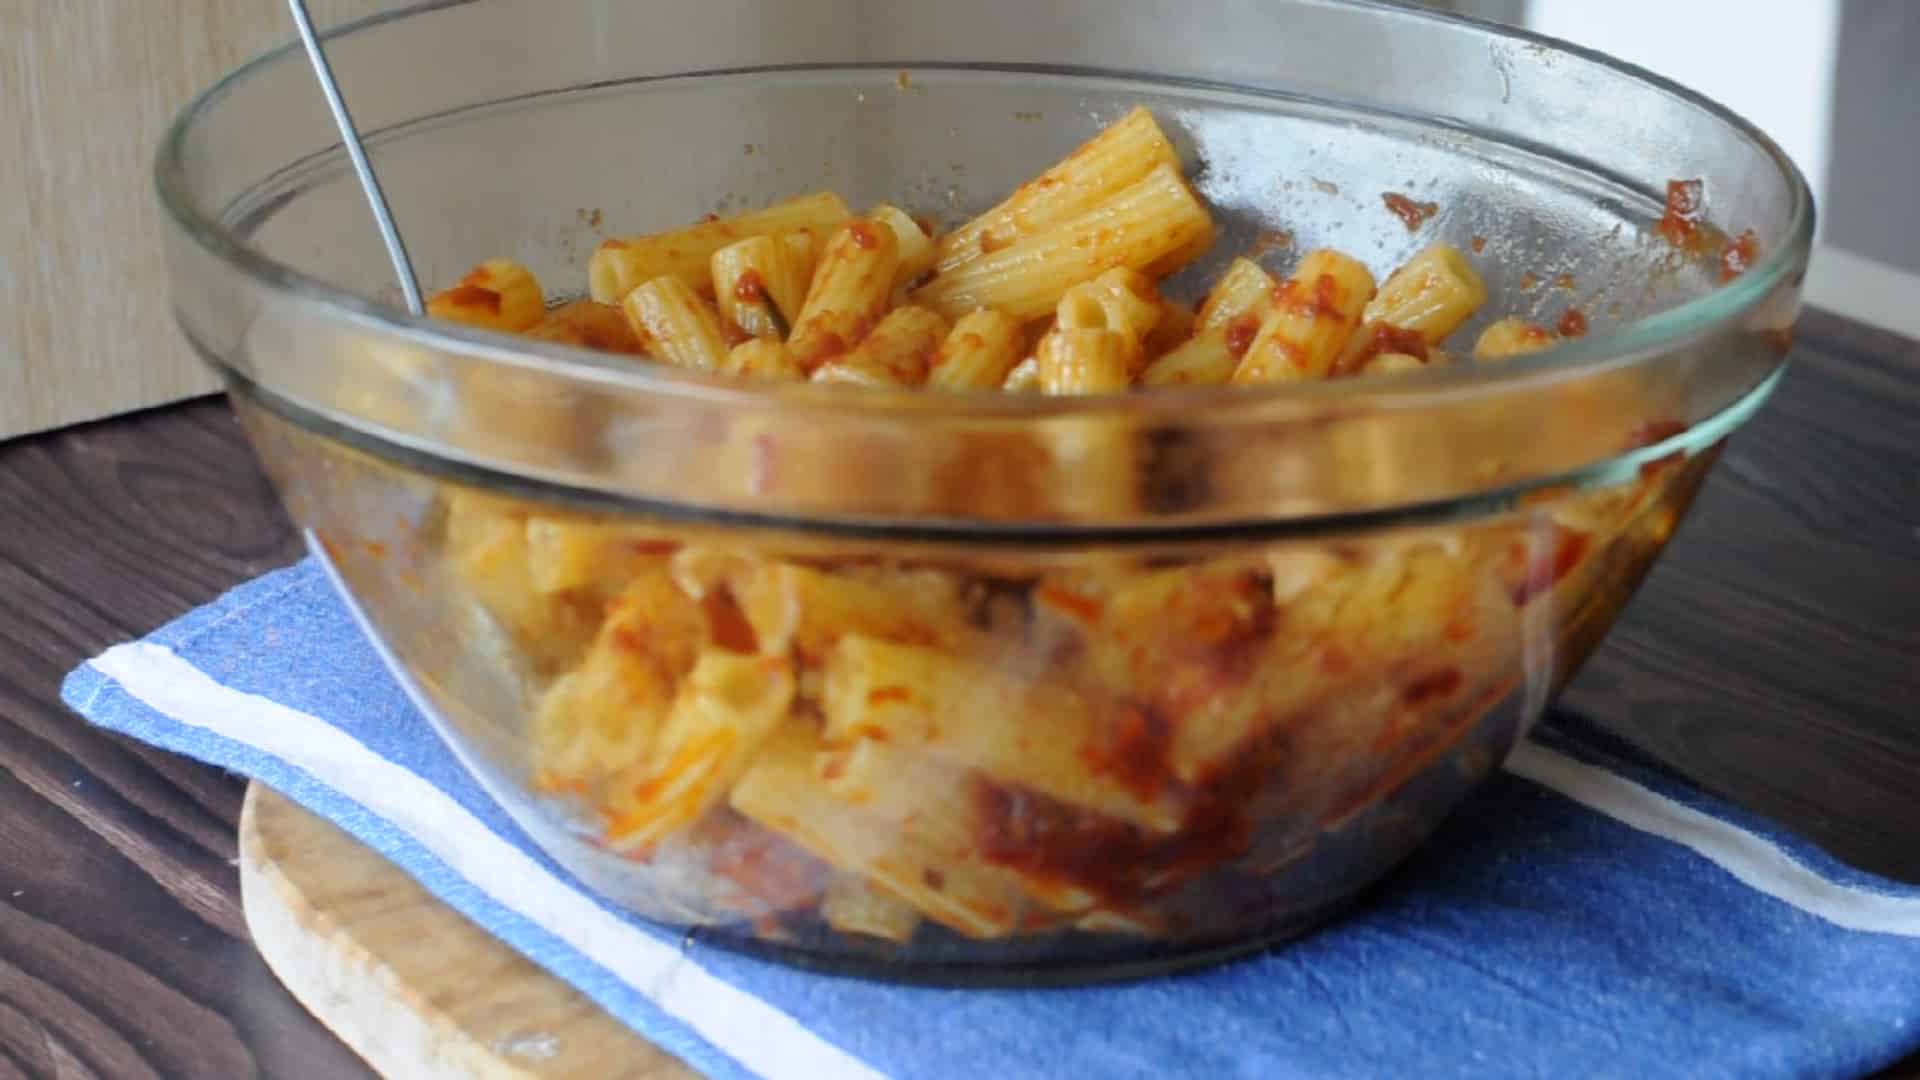 Seasoning the pasta